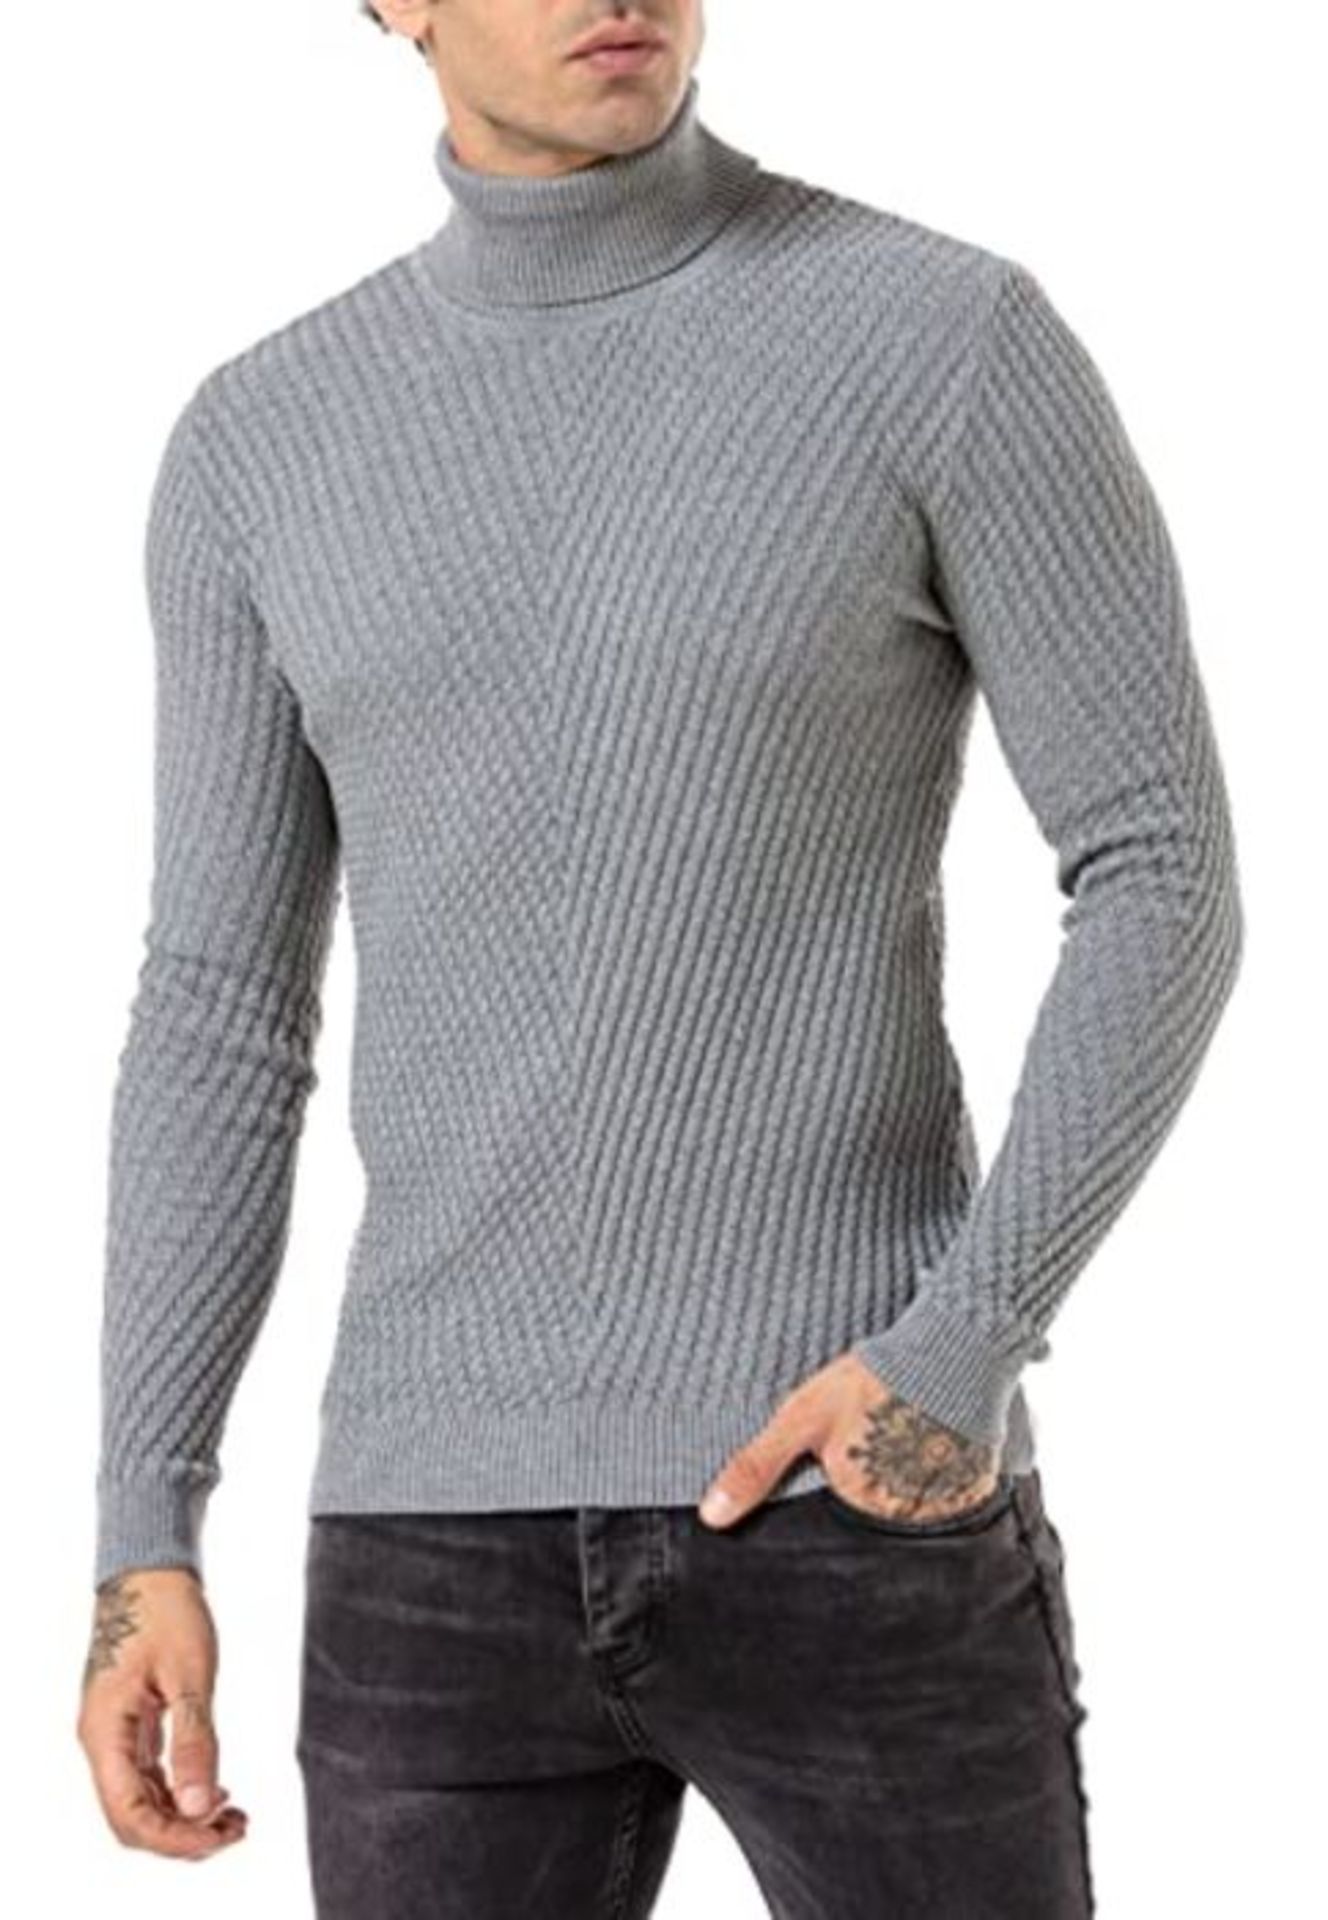 Redbridge Turtleneck knitted jumper with pattern, gray, S